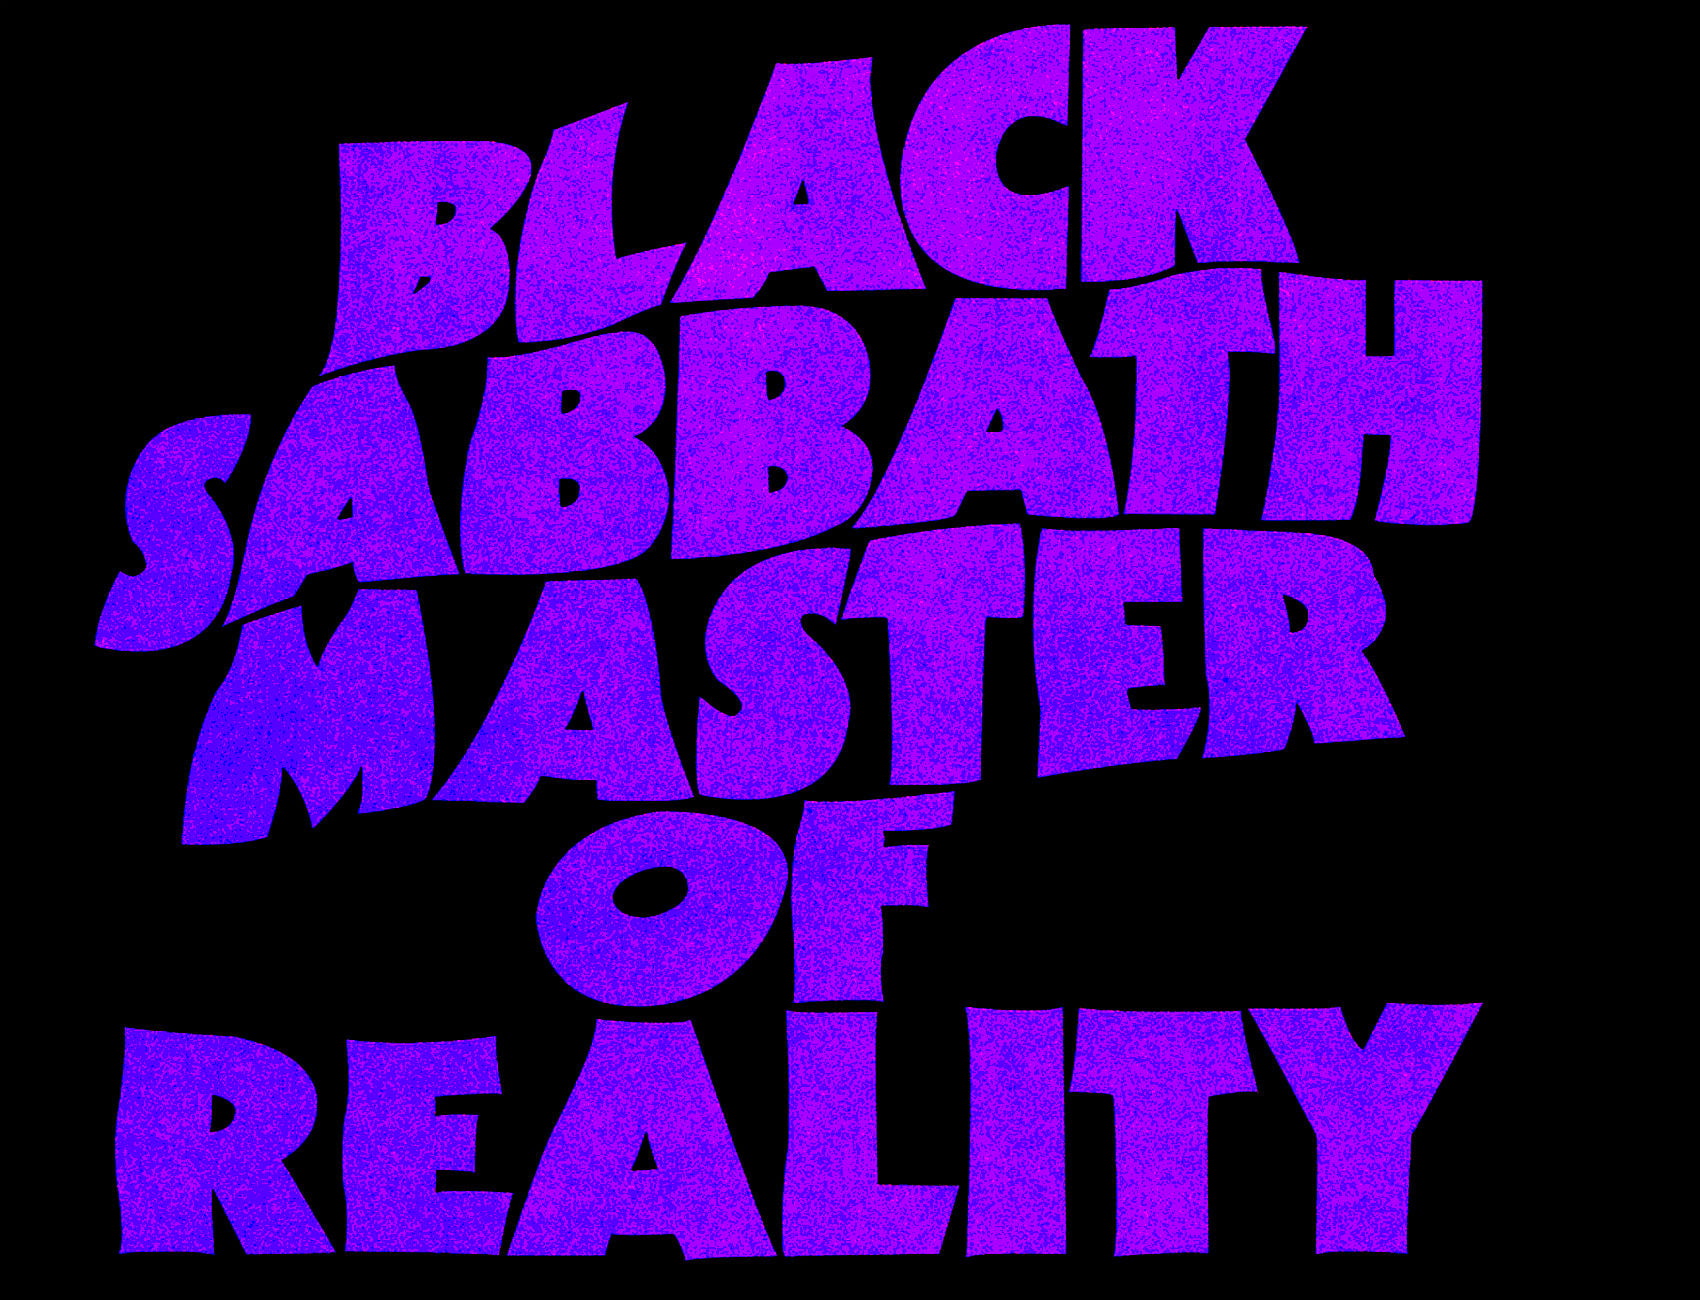 black, heavy, metal, sabbath